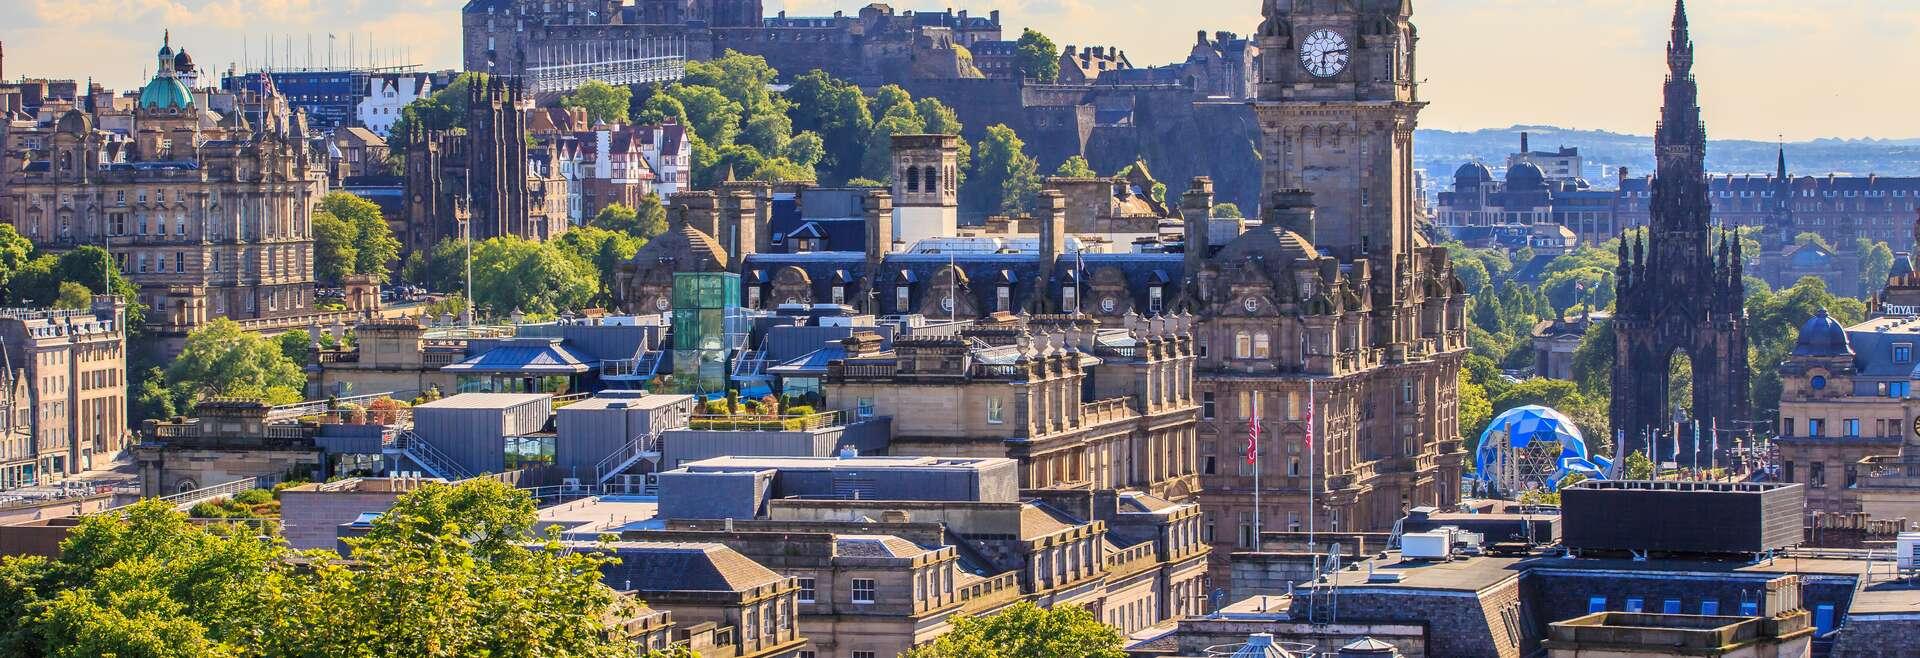 Séjour linguistique Angleterre, Edinburgh - Castle Rock